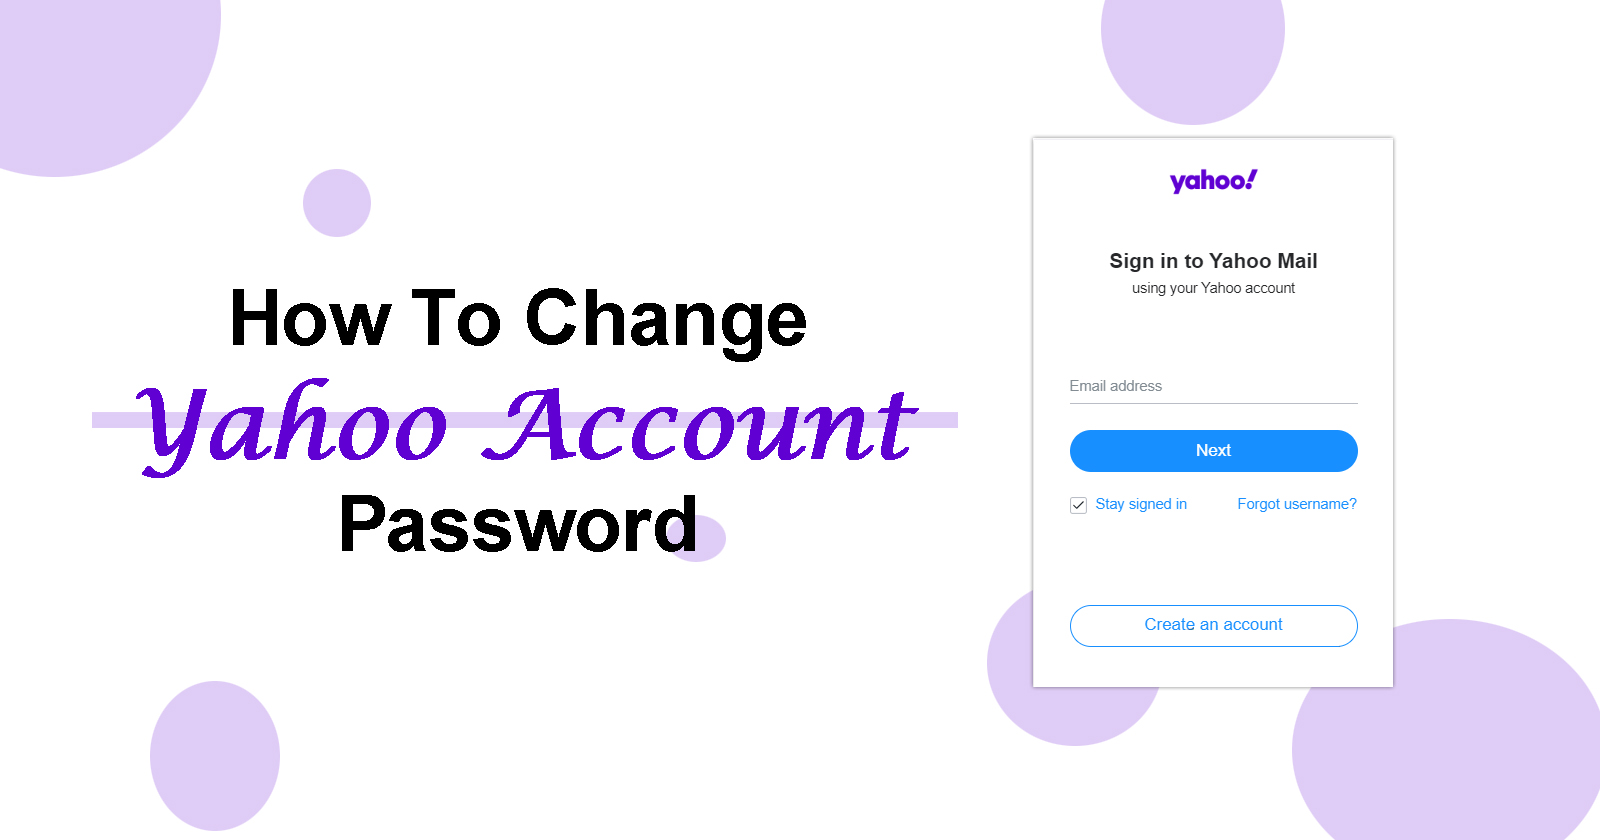 How to Change Yahoo Password